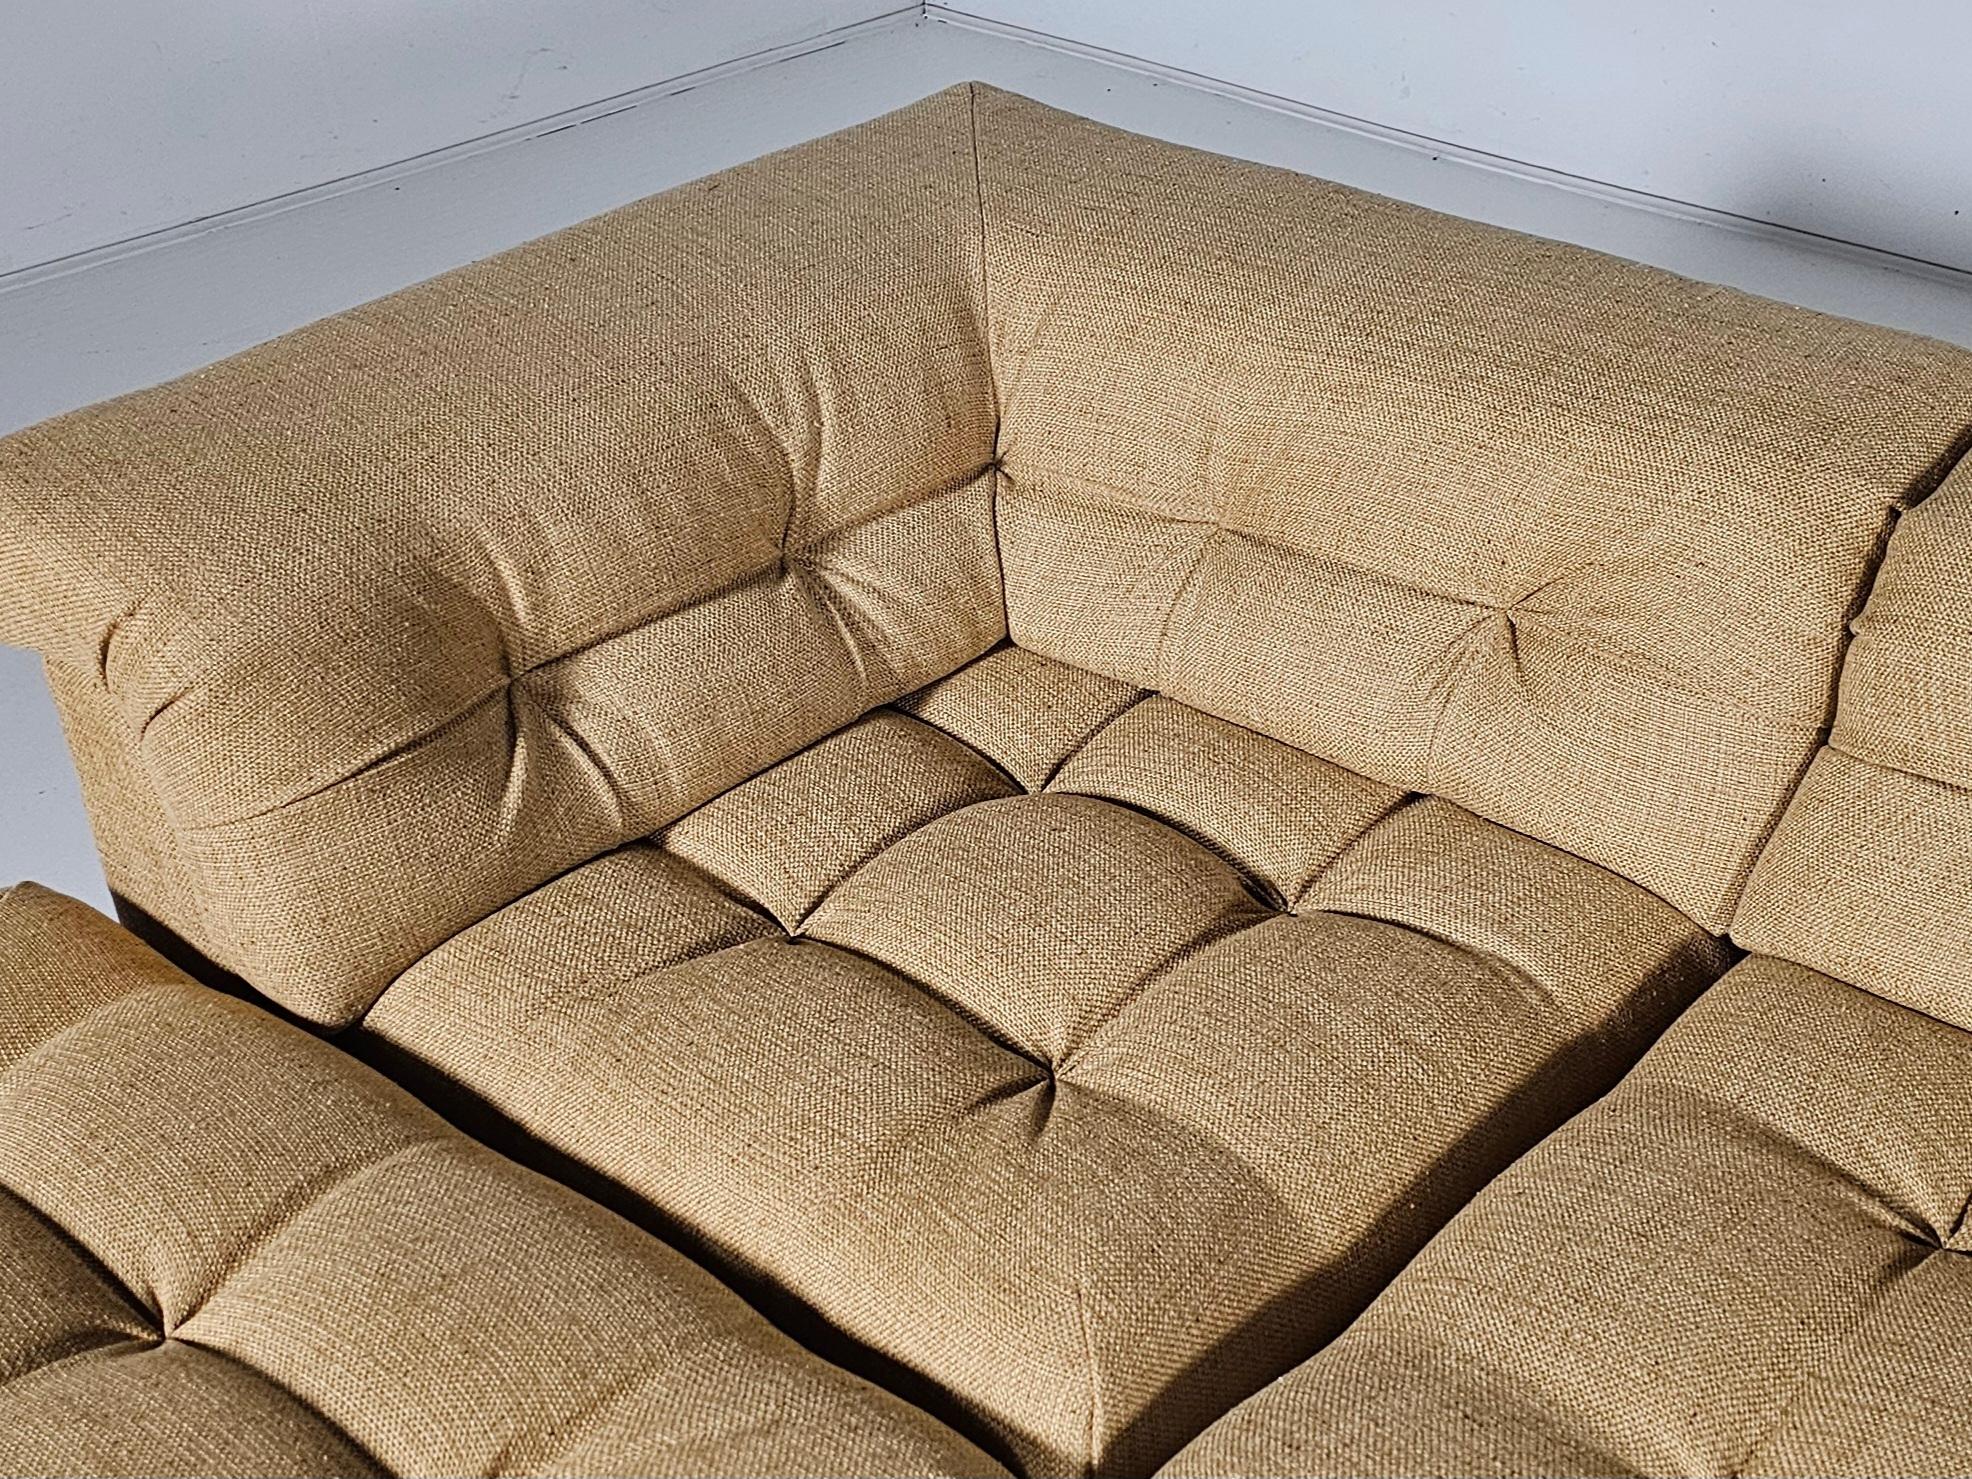 European Mah Jong sofa in beige/sand fabric by Hans Hopfer, Roche Bobois, France, 1970s